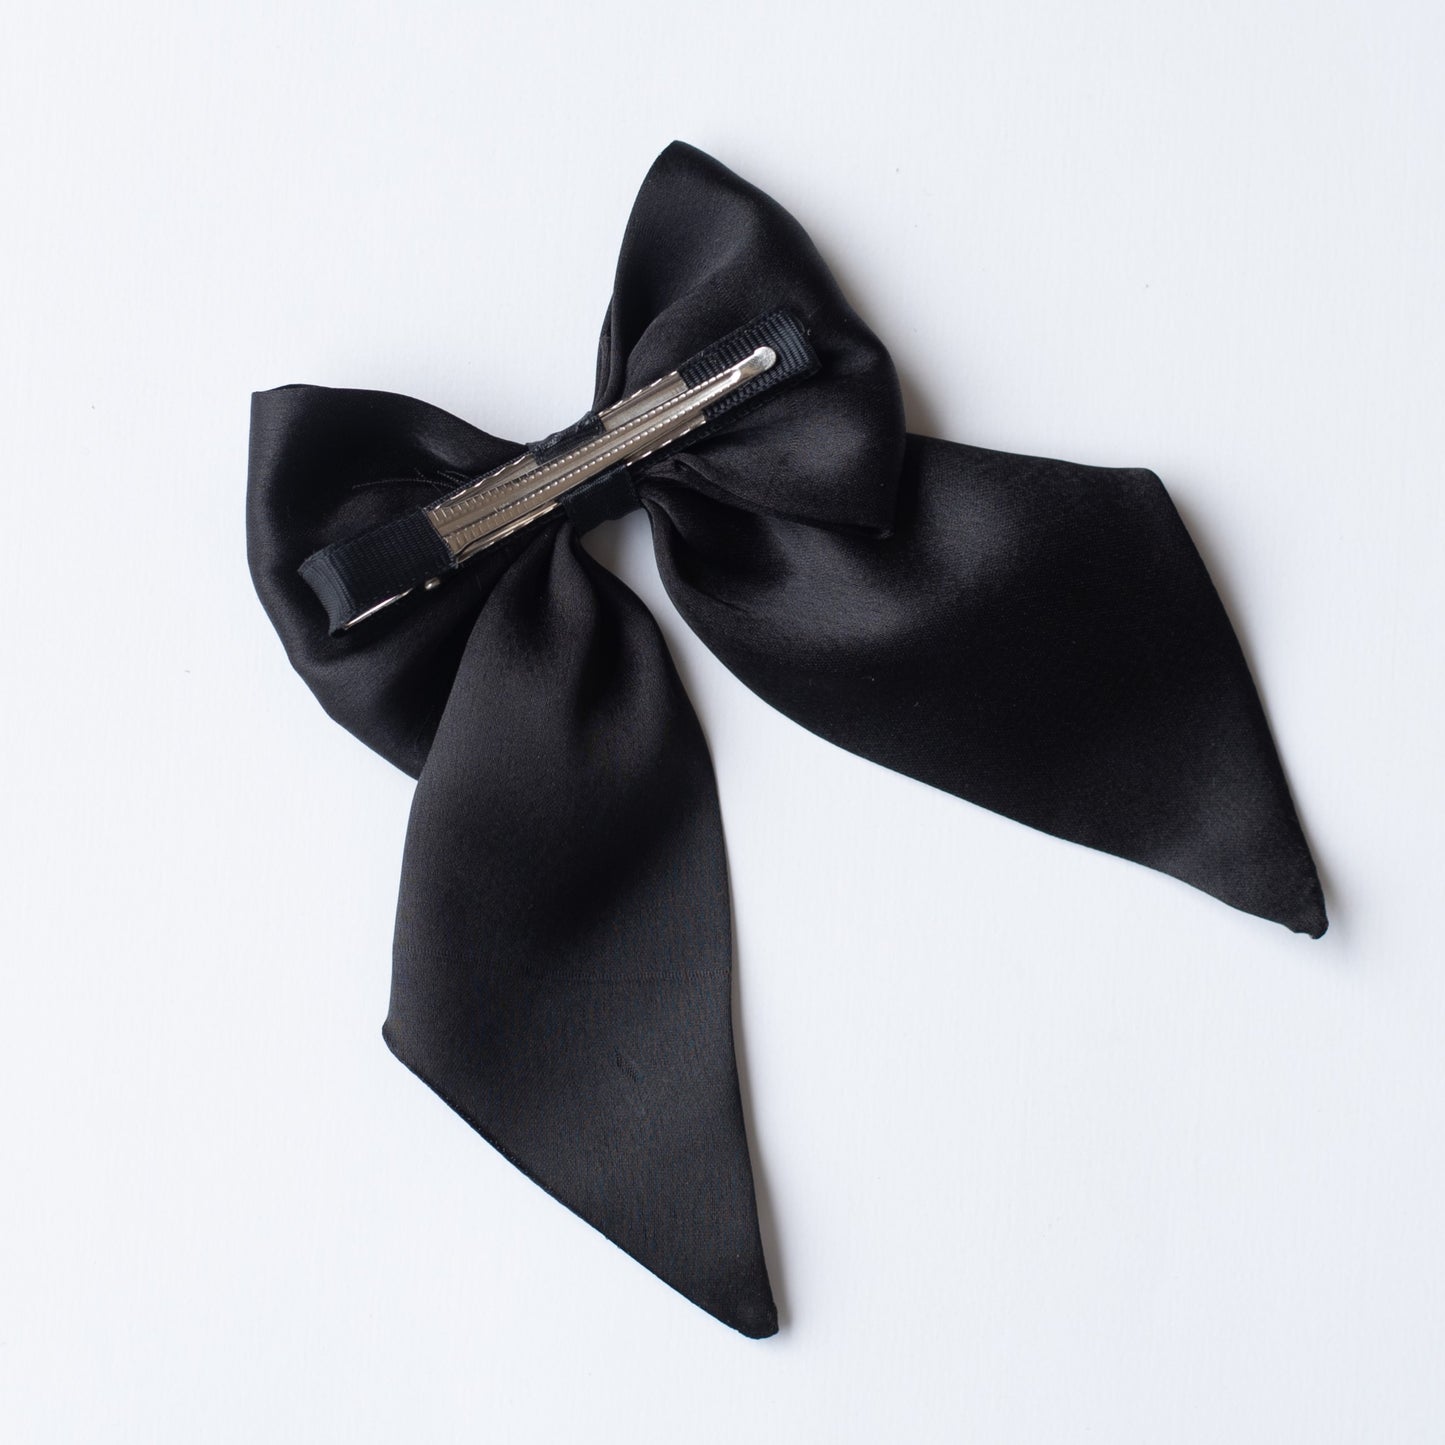 Big fancy satin bow on alligator clip embellished with pearls - Black